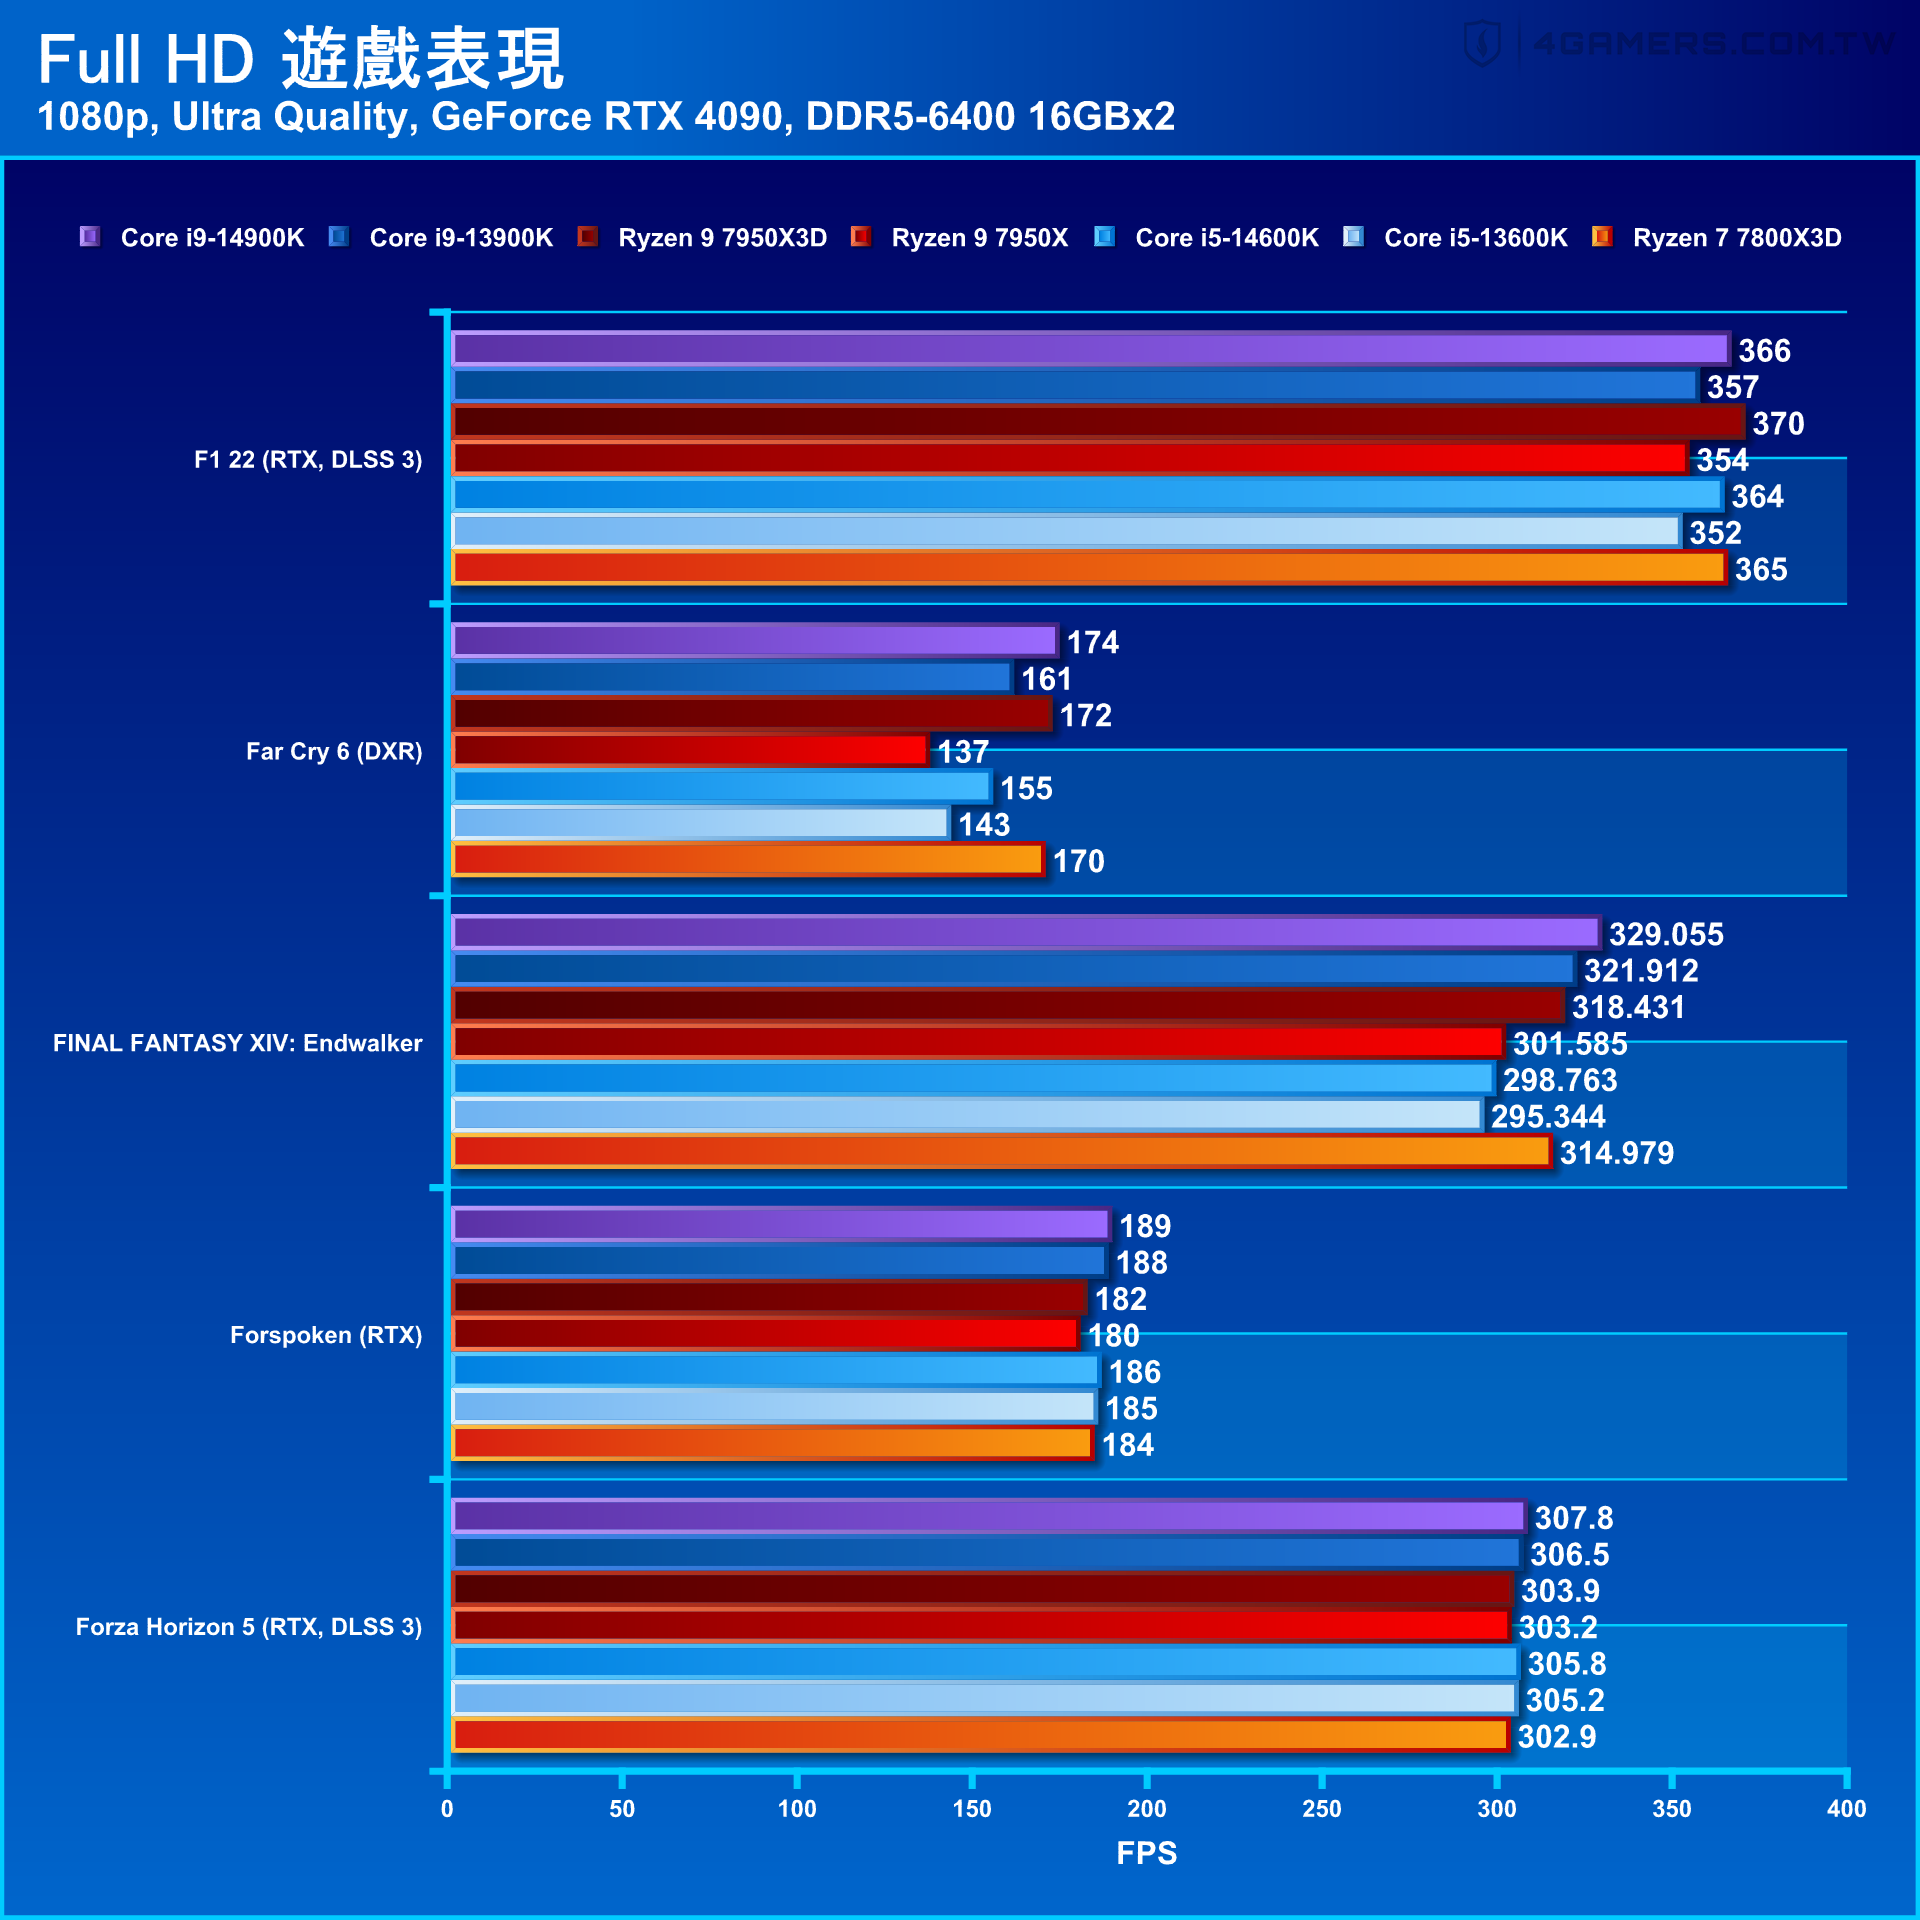 Intel Core i9-14900K and Core i5-14600K